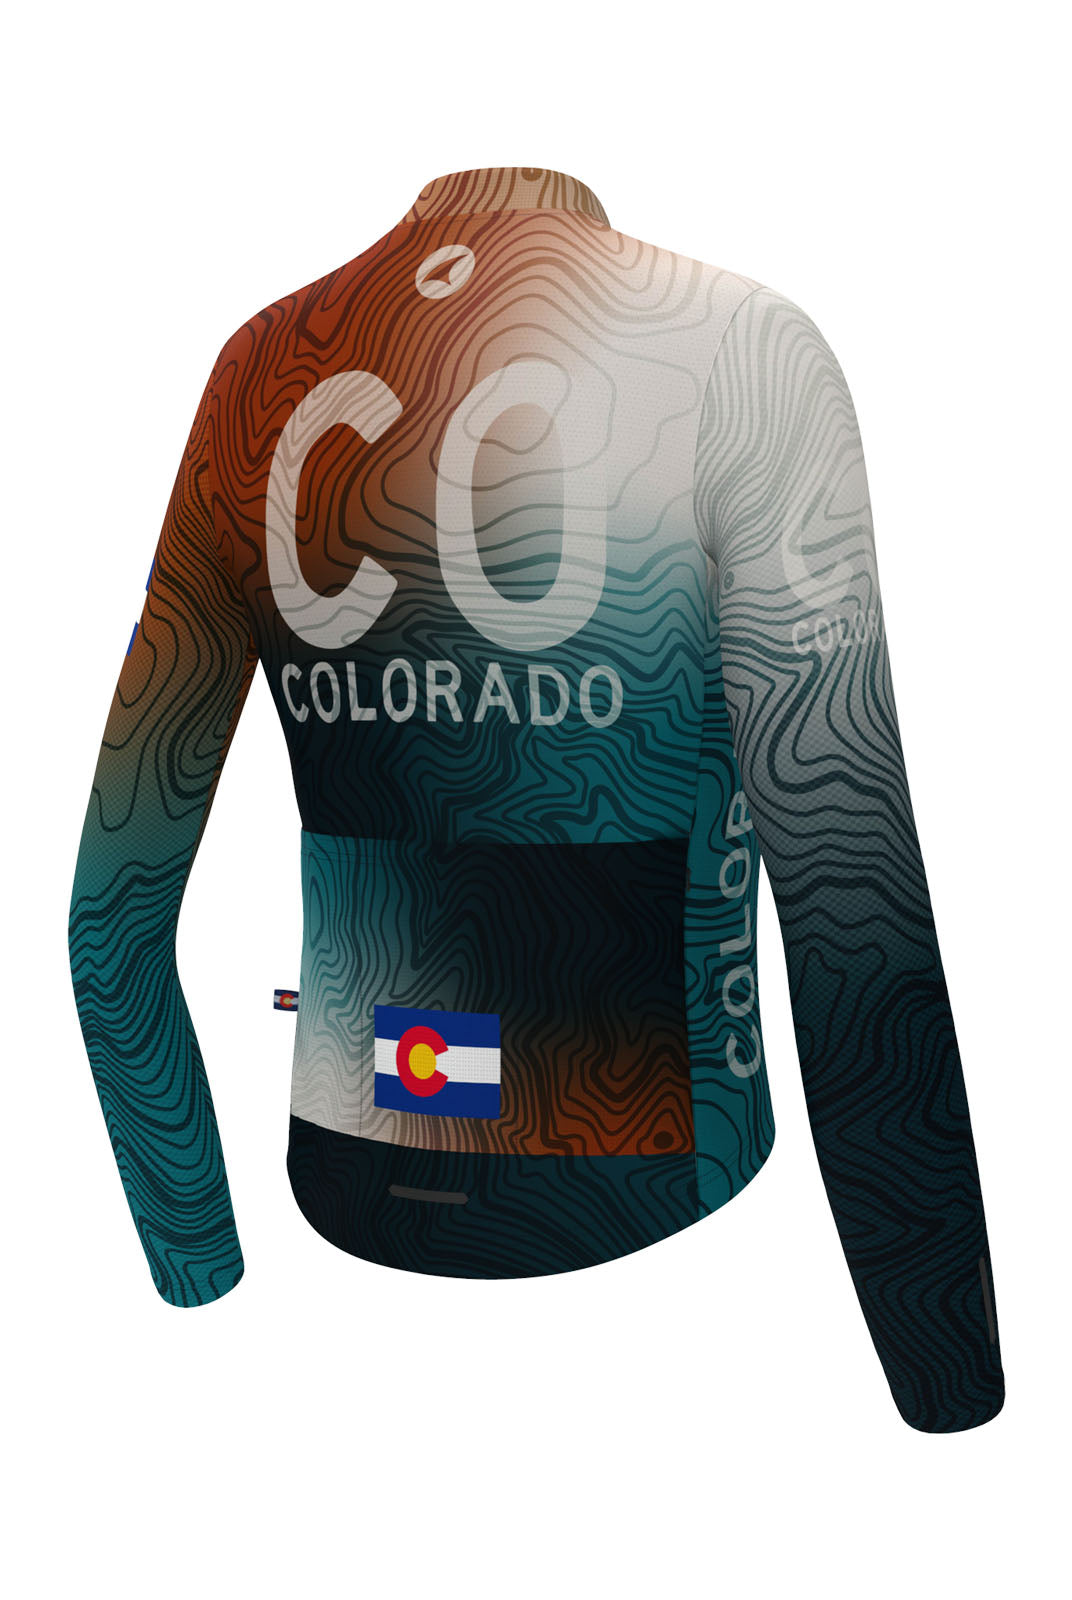 Women's Colorado Geo Long Sleeve Cycling Jersey - Back View